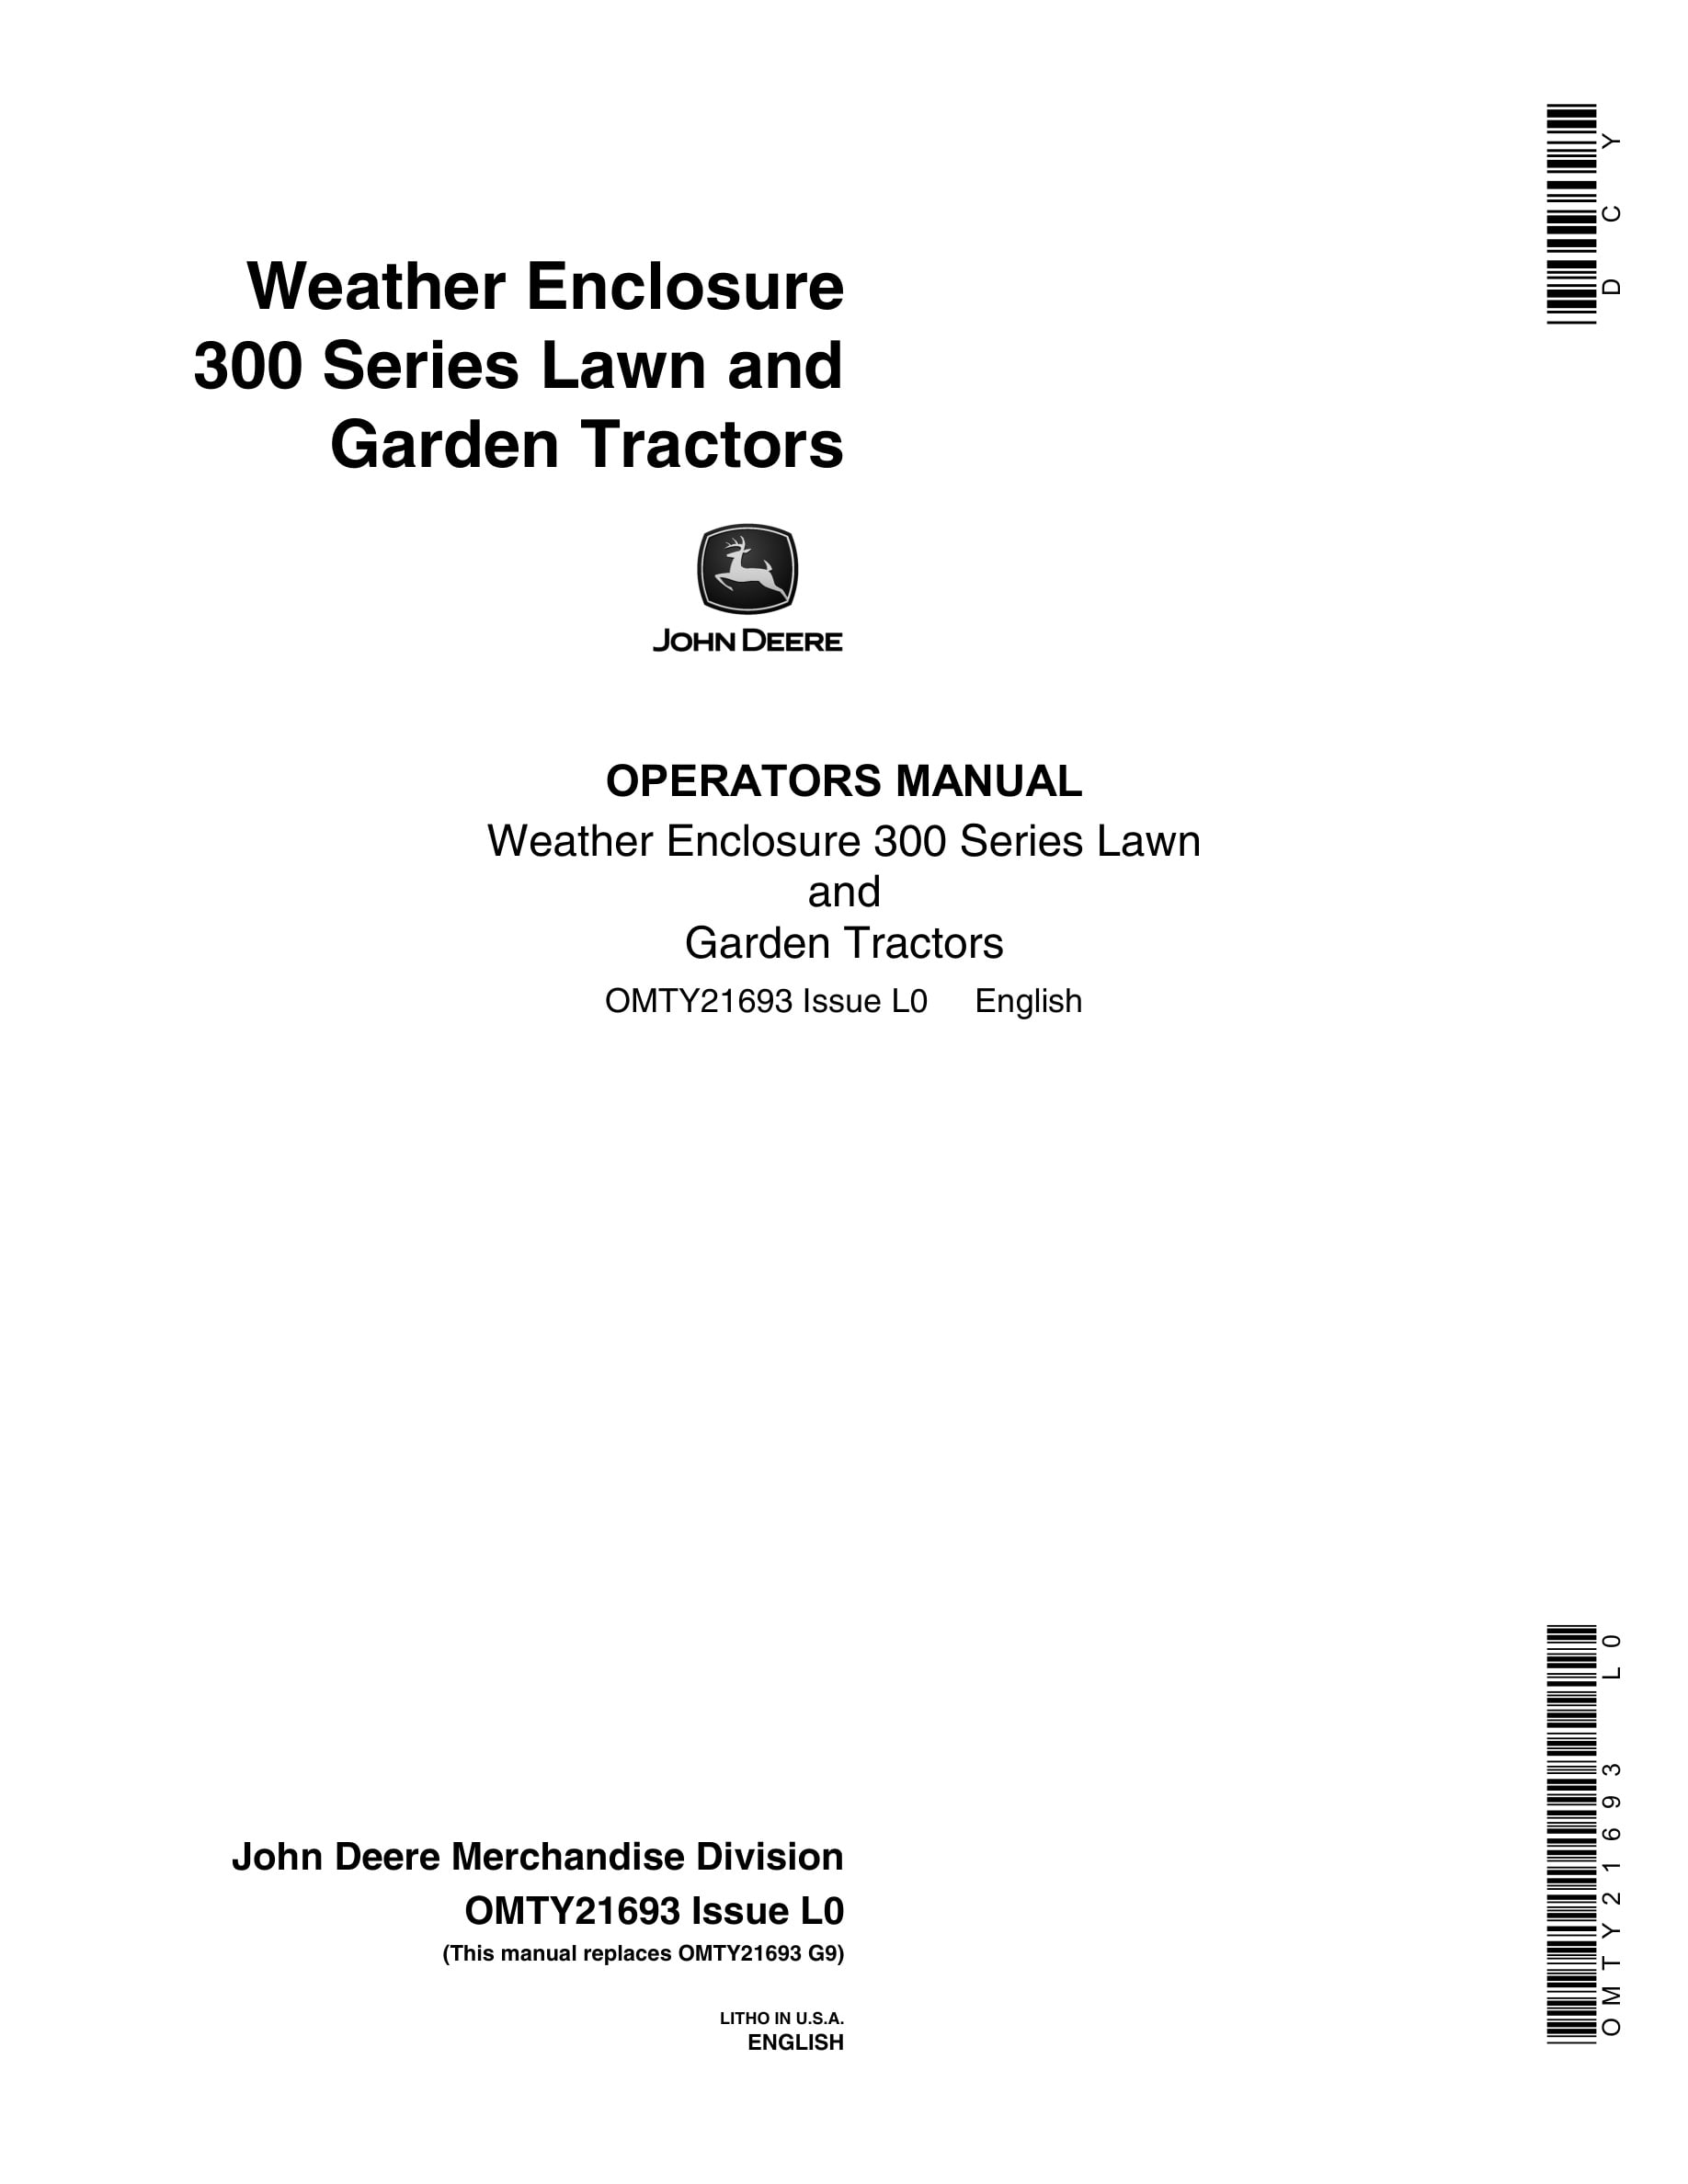 John Deere Weather Enclosure 300 Series Lawn And Garden Tractors Operator Manuals OMTY21693-1